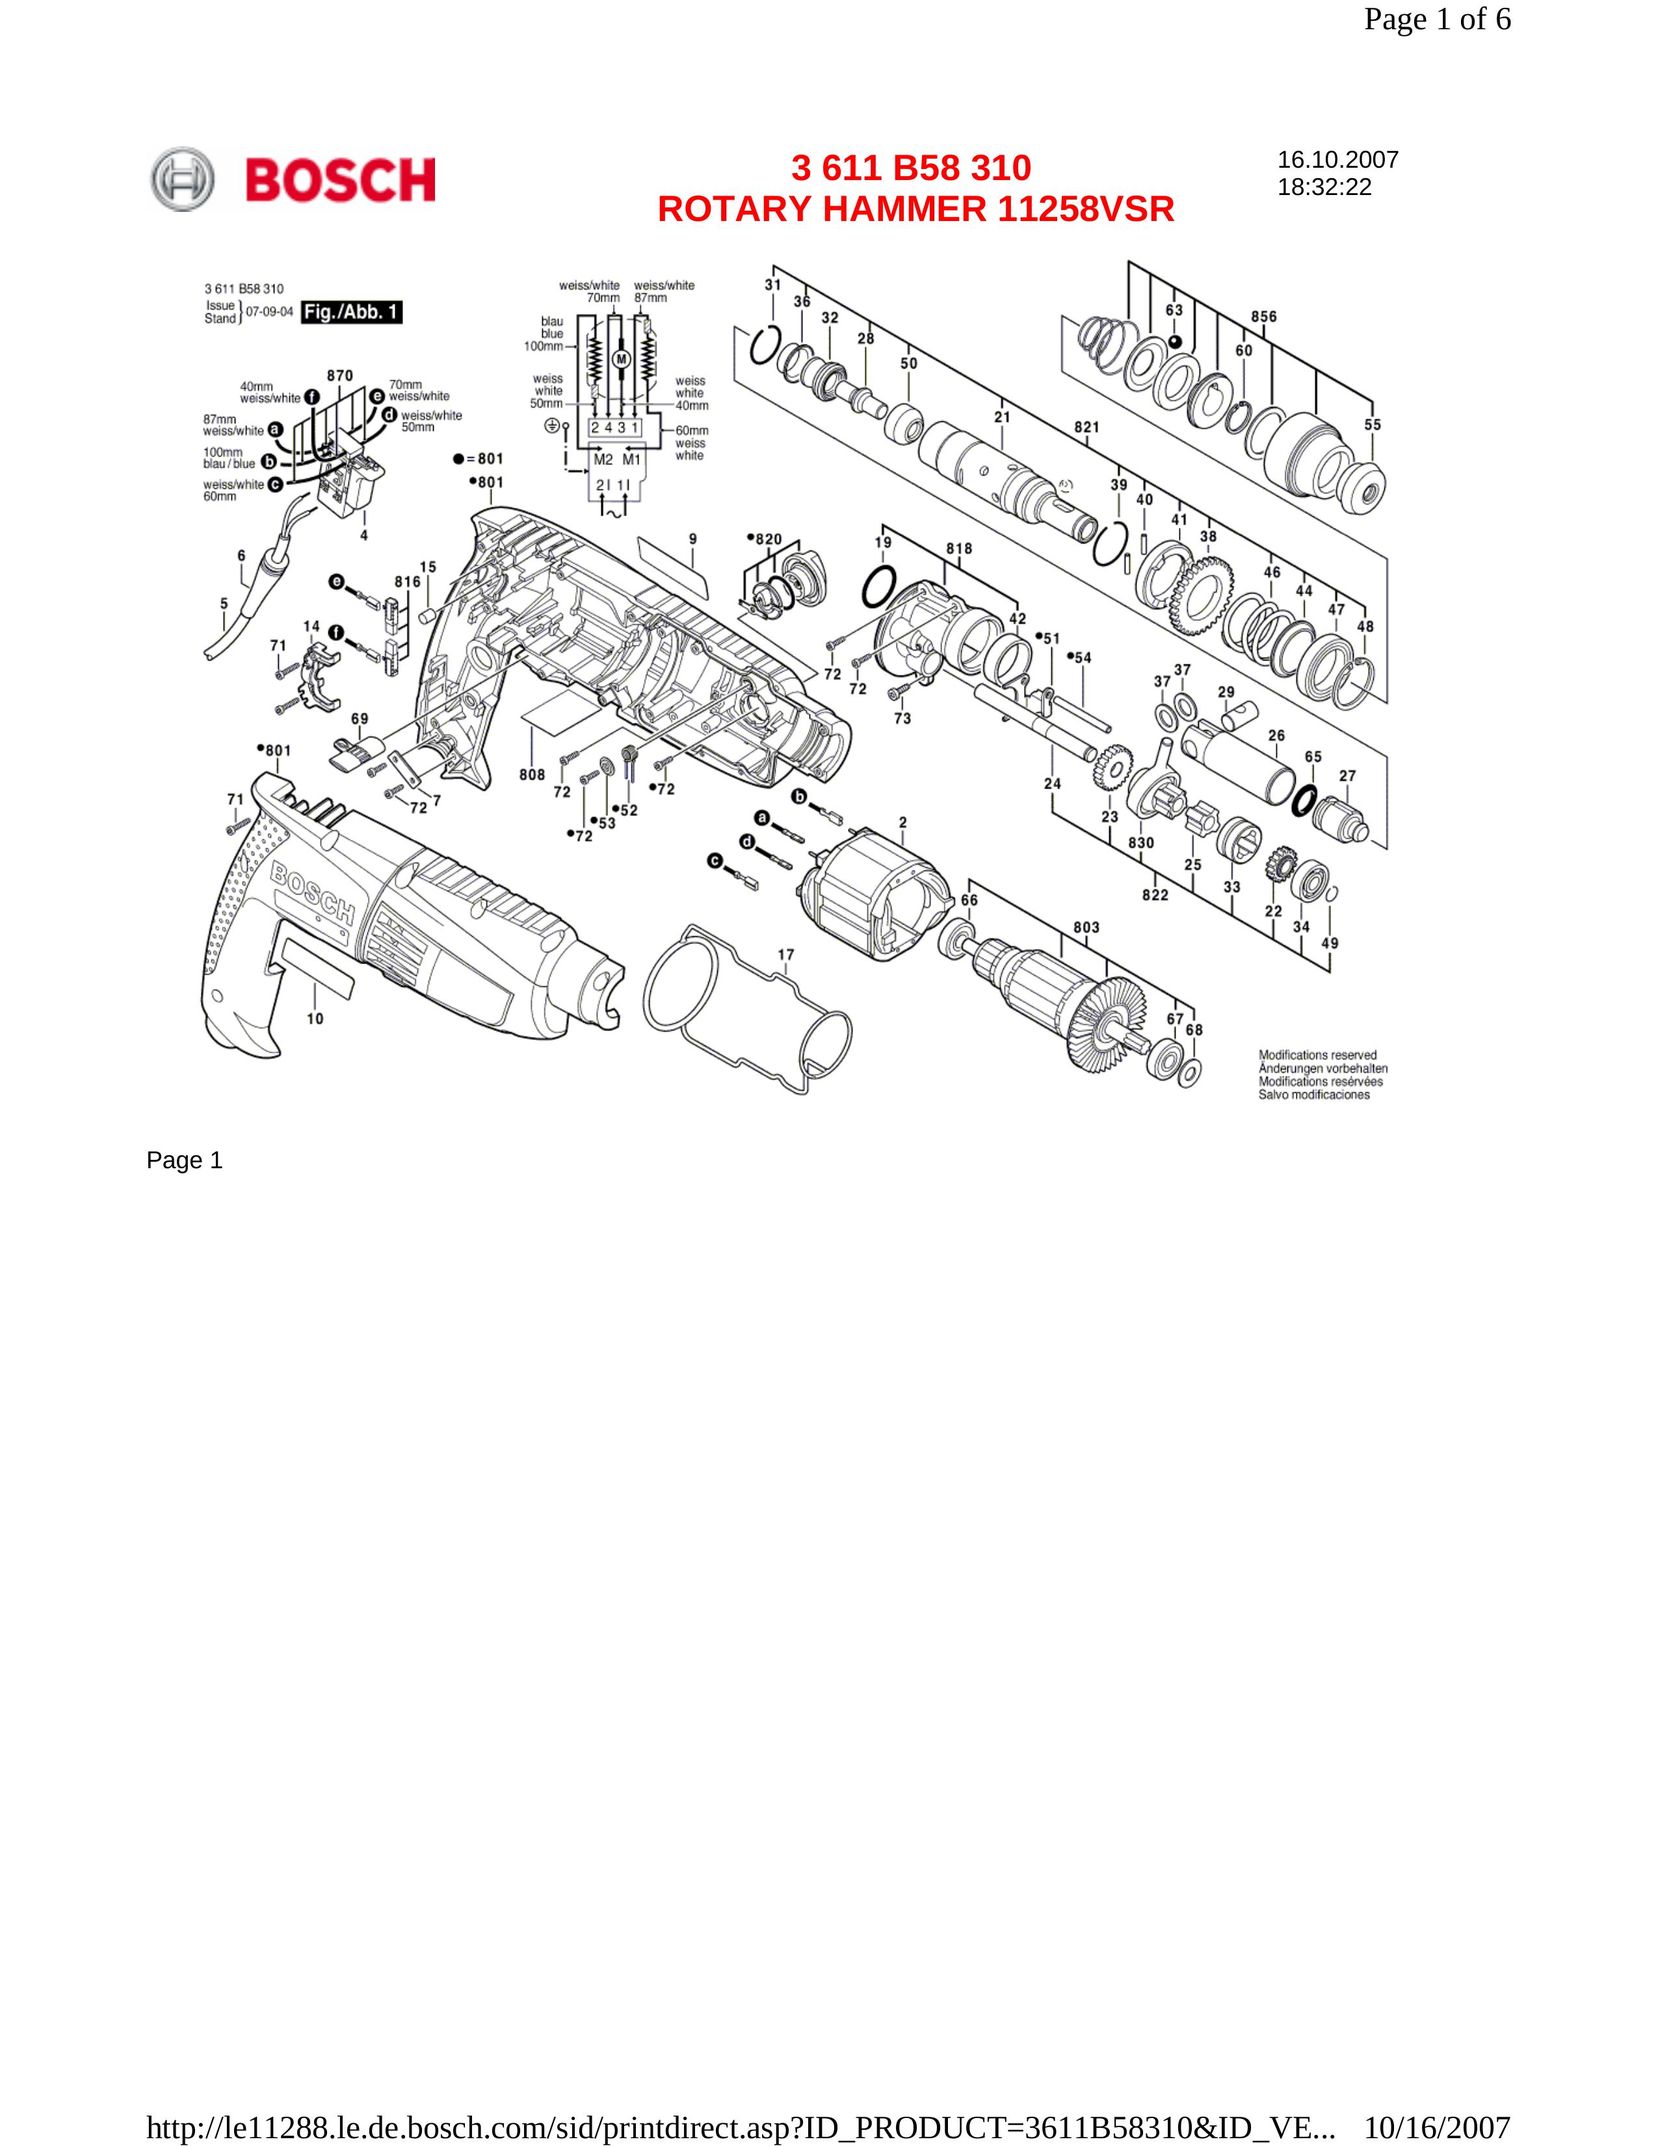 Bosch Power Tools 11258VSR Universal Remote User Manual